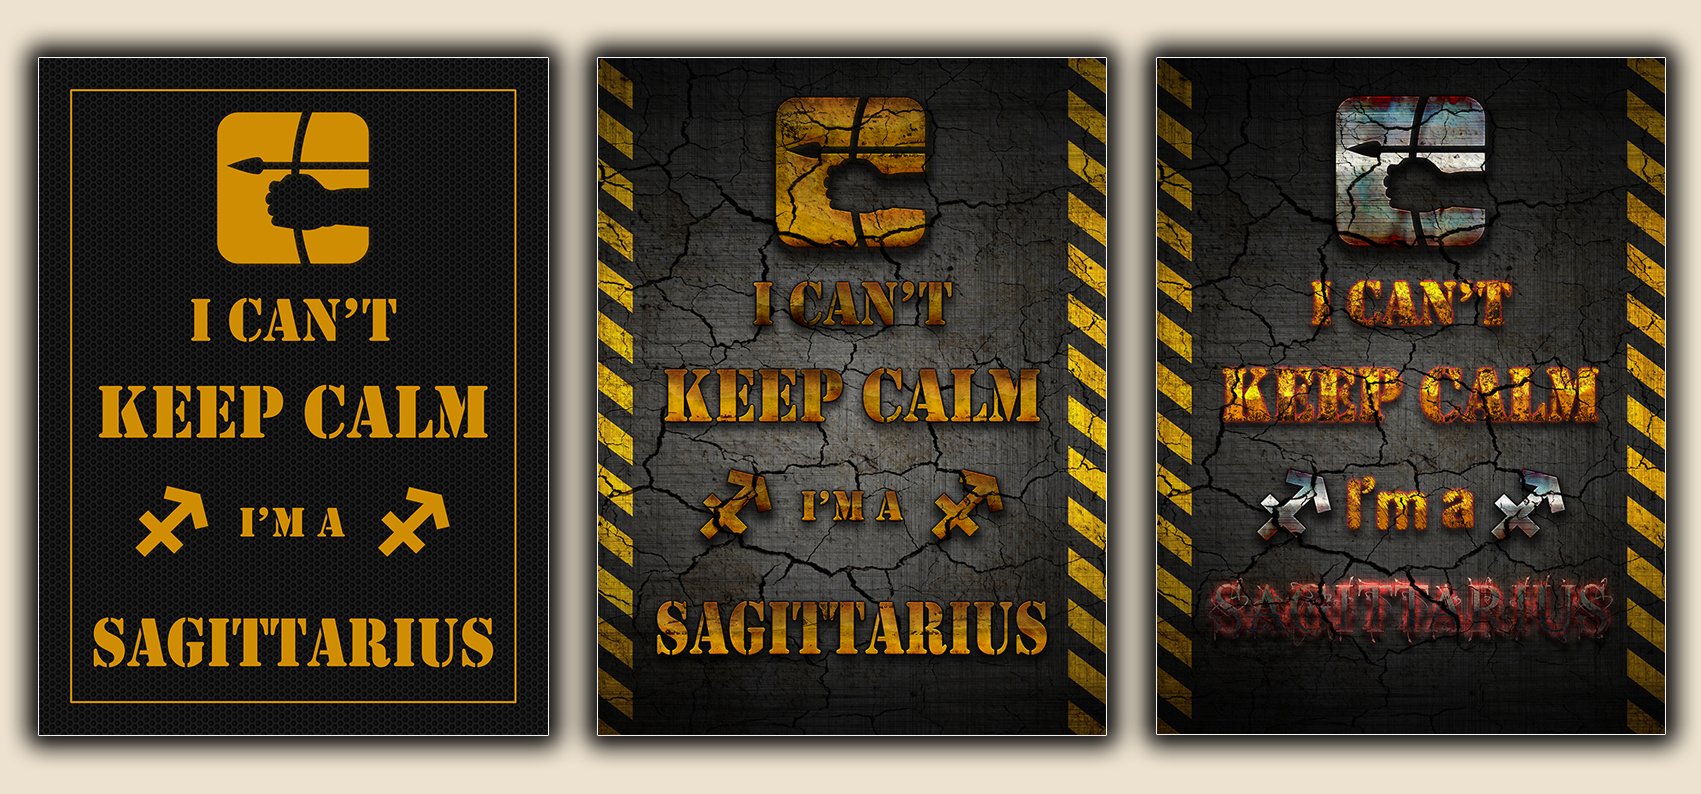 I Can't Keep Calm - I'm a Sagittarius